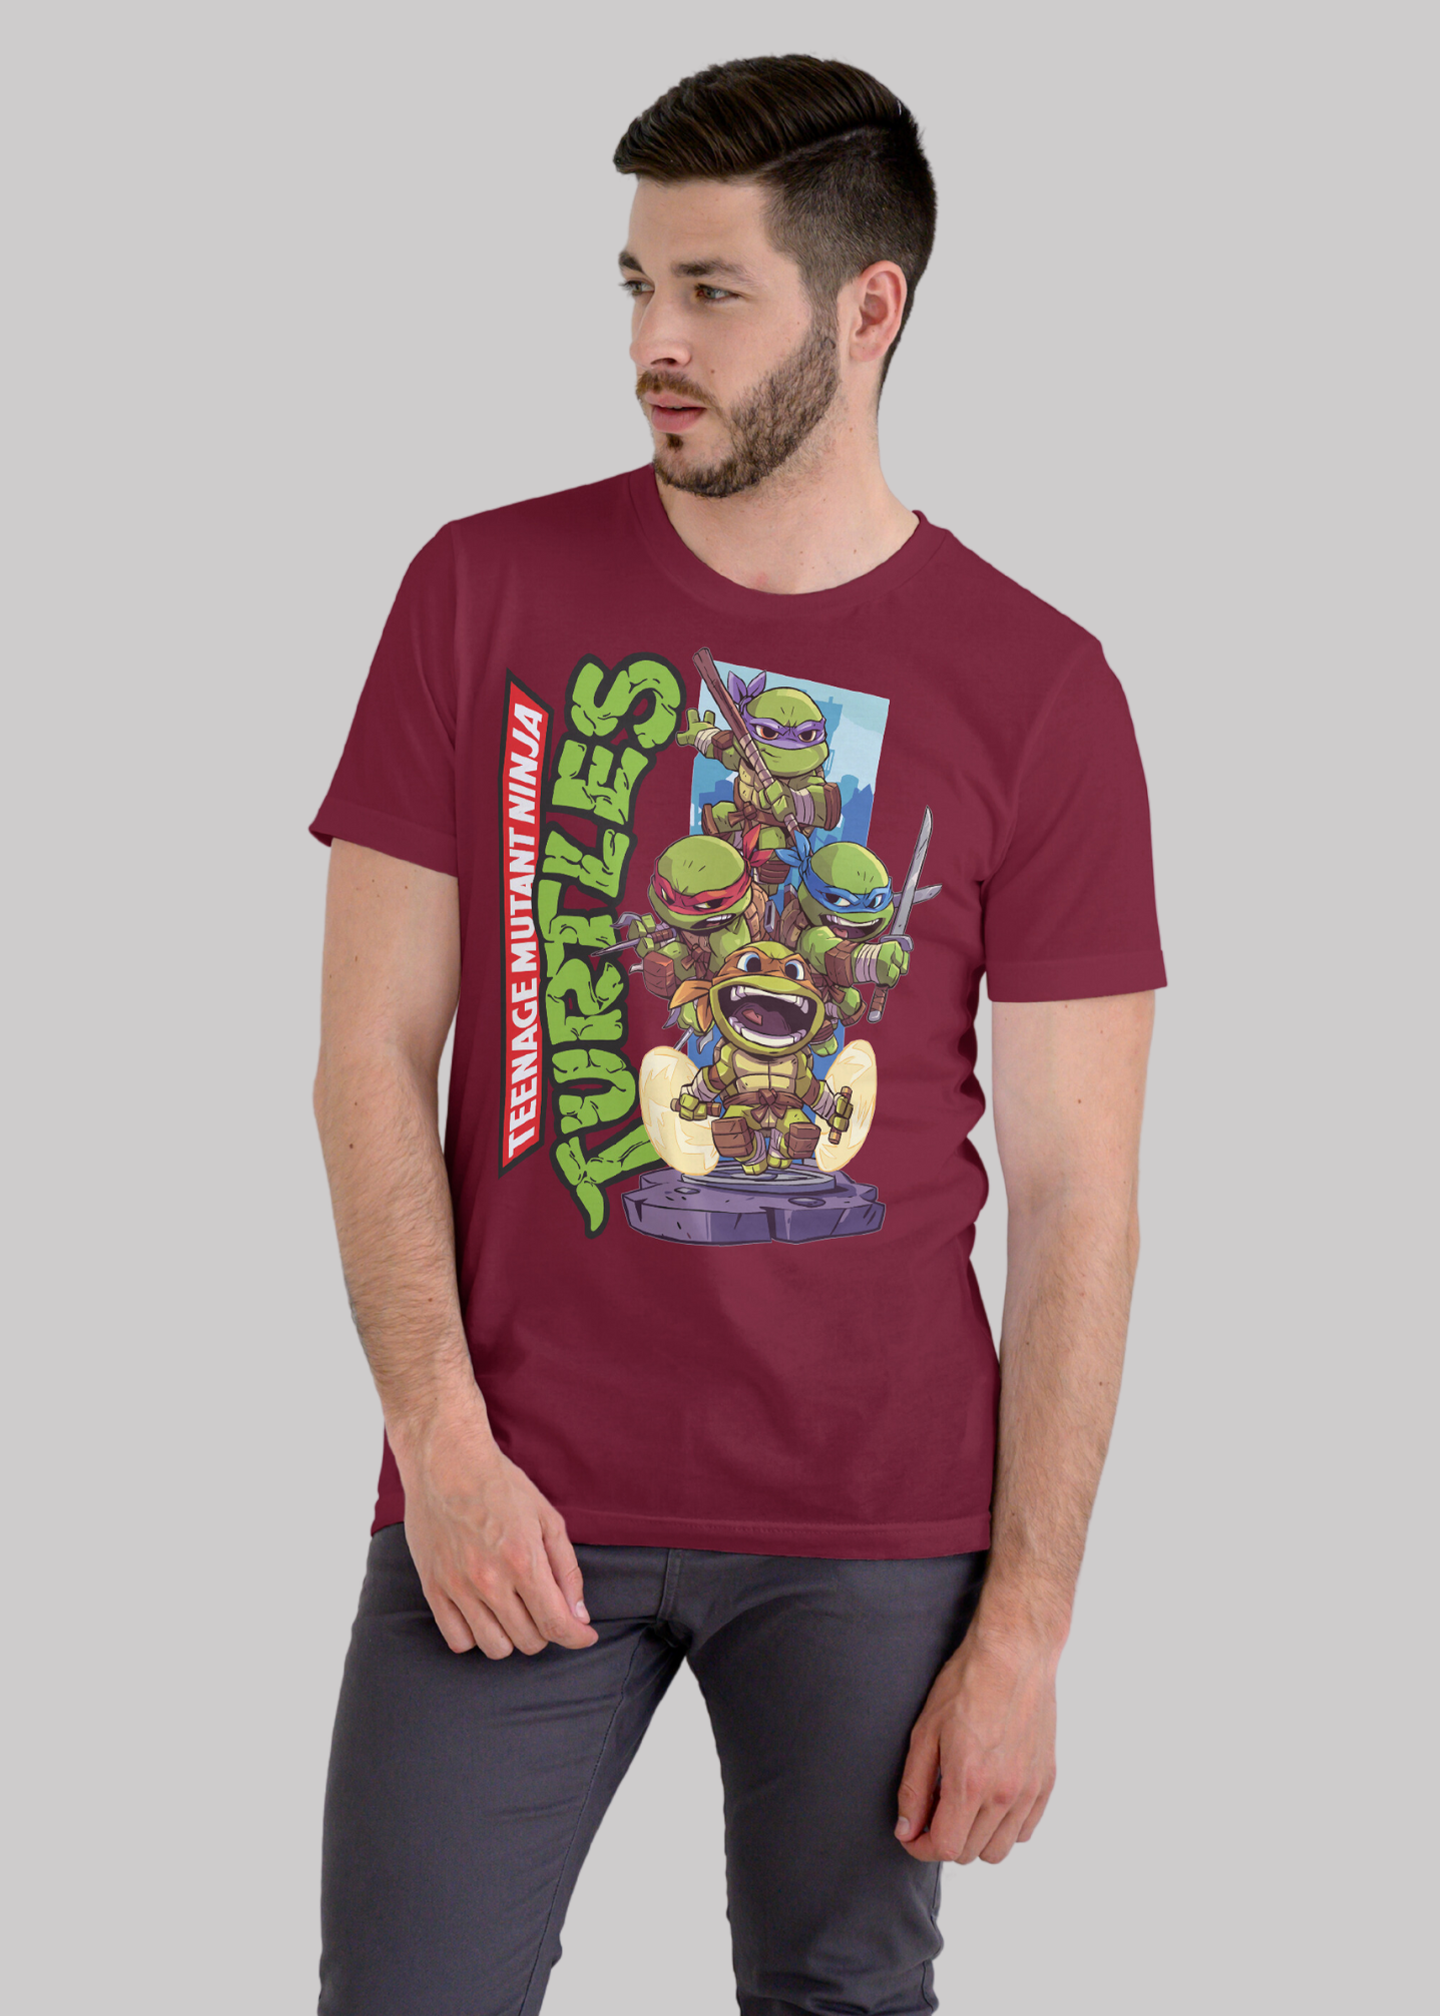 Ninja Turtle Printed Half Sleeve Premium Cotton T-shirt For Men